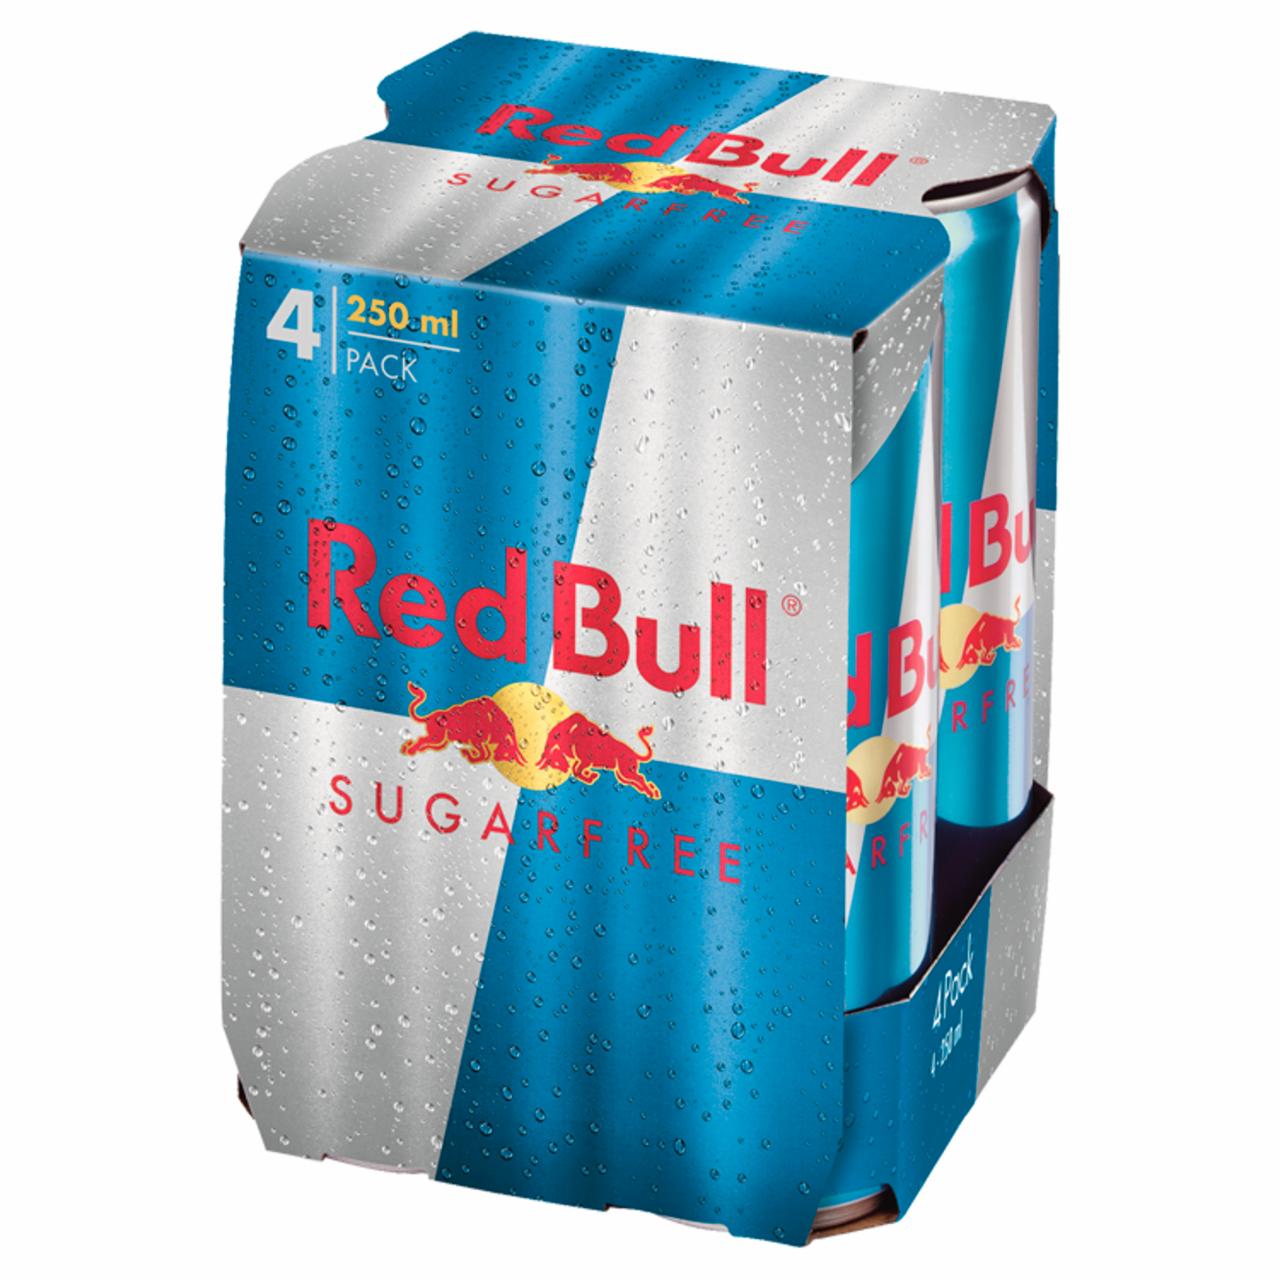 Képek - Red Bull Sugarfree energiaital 4 x 250 ml